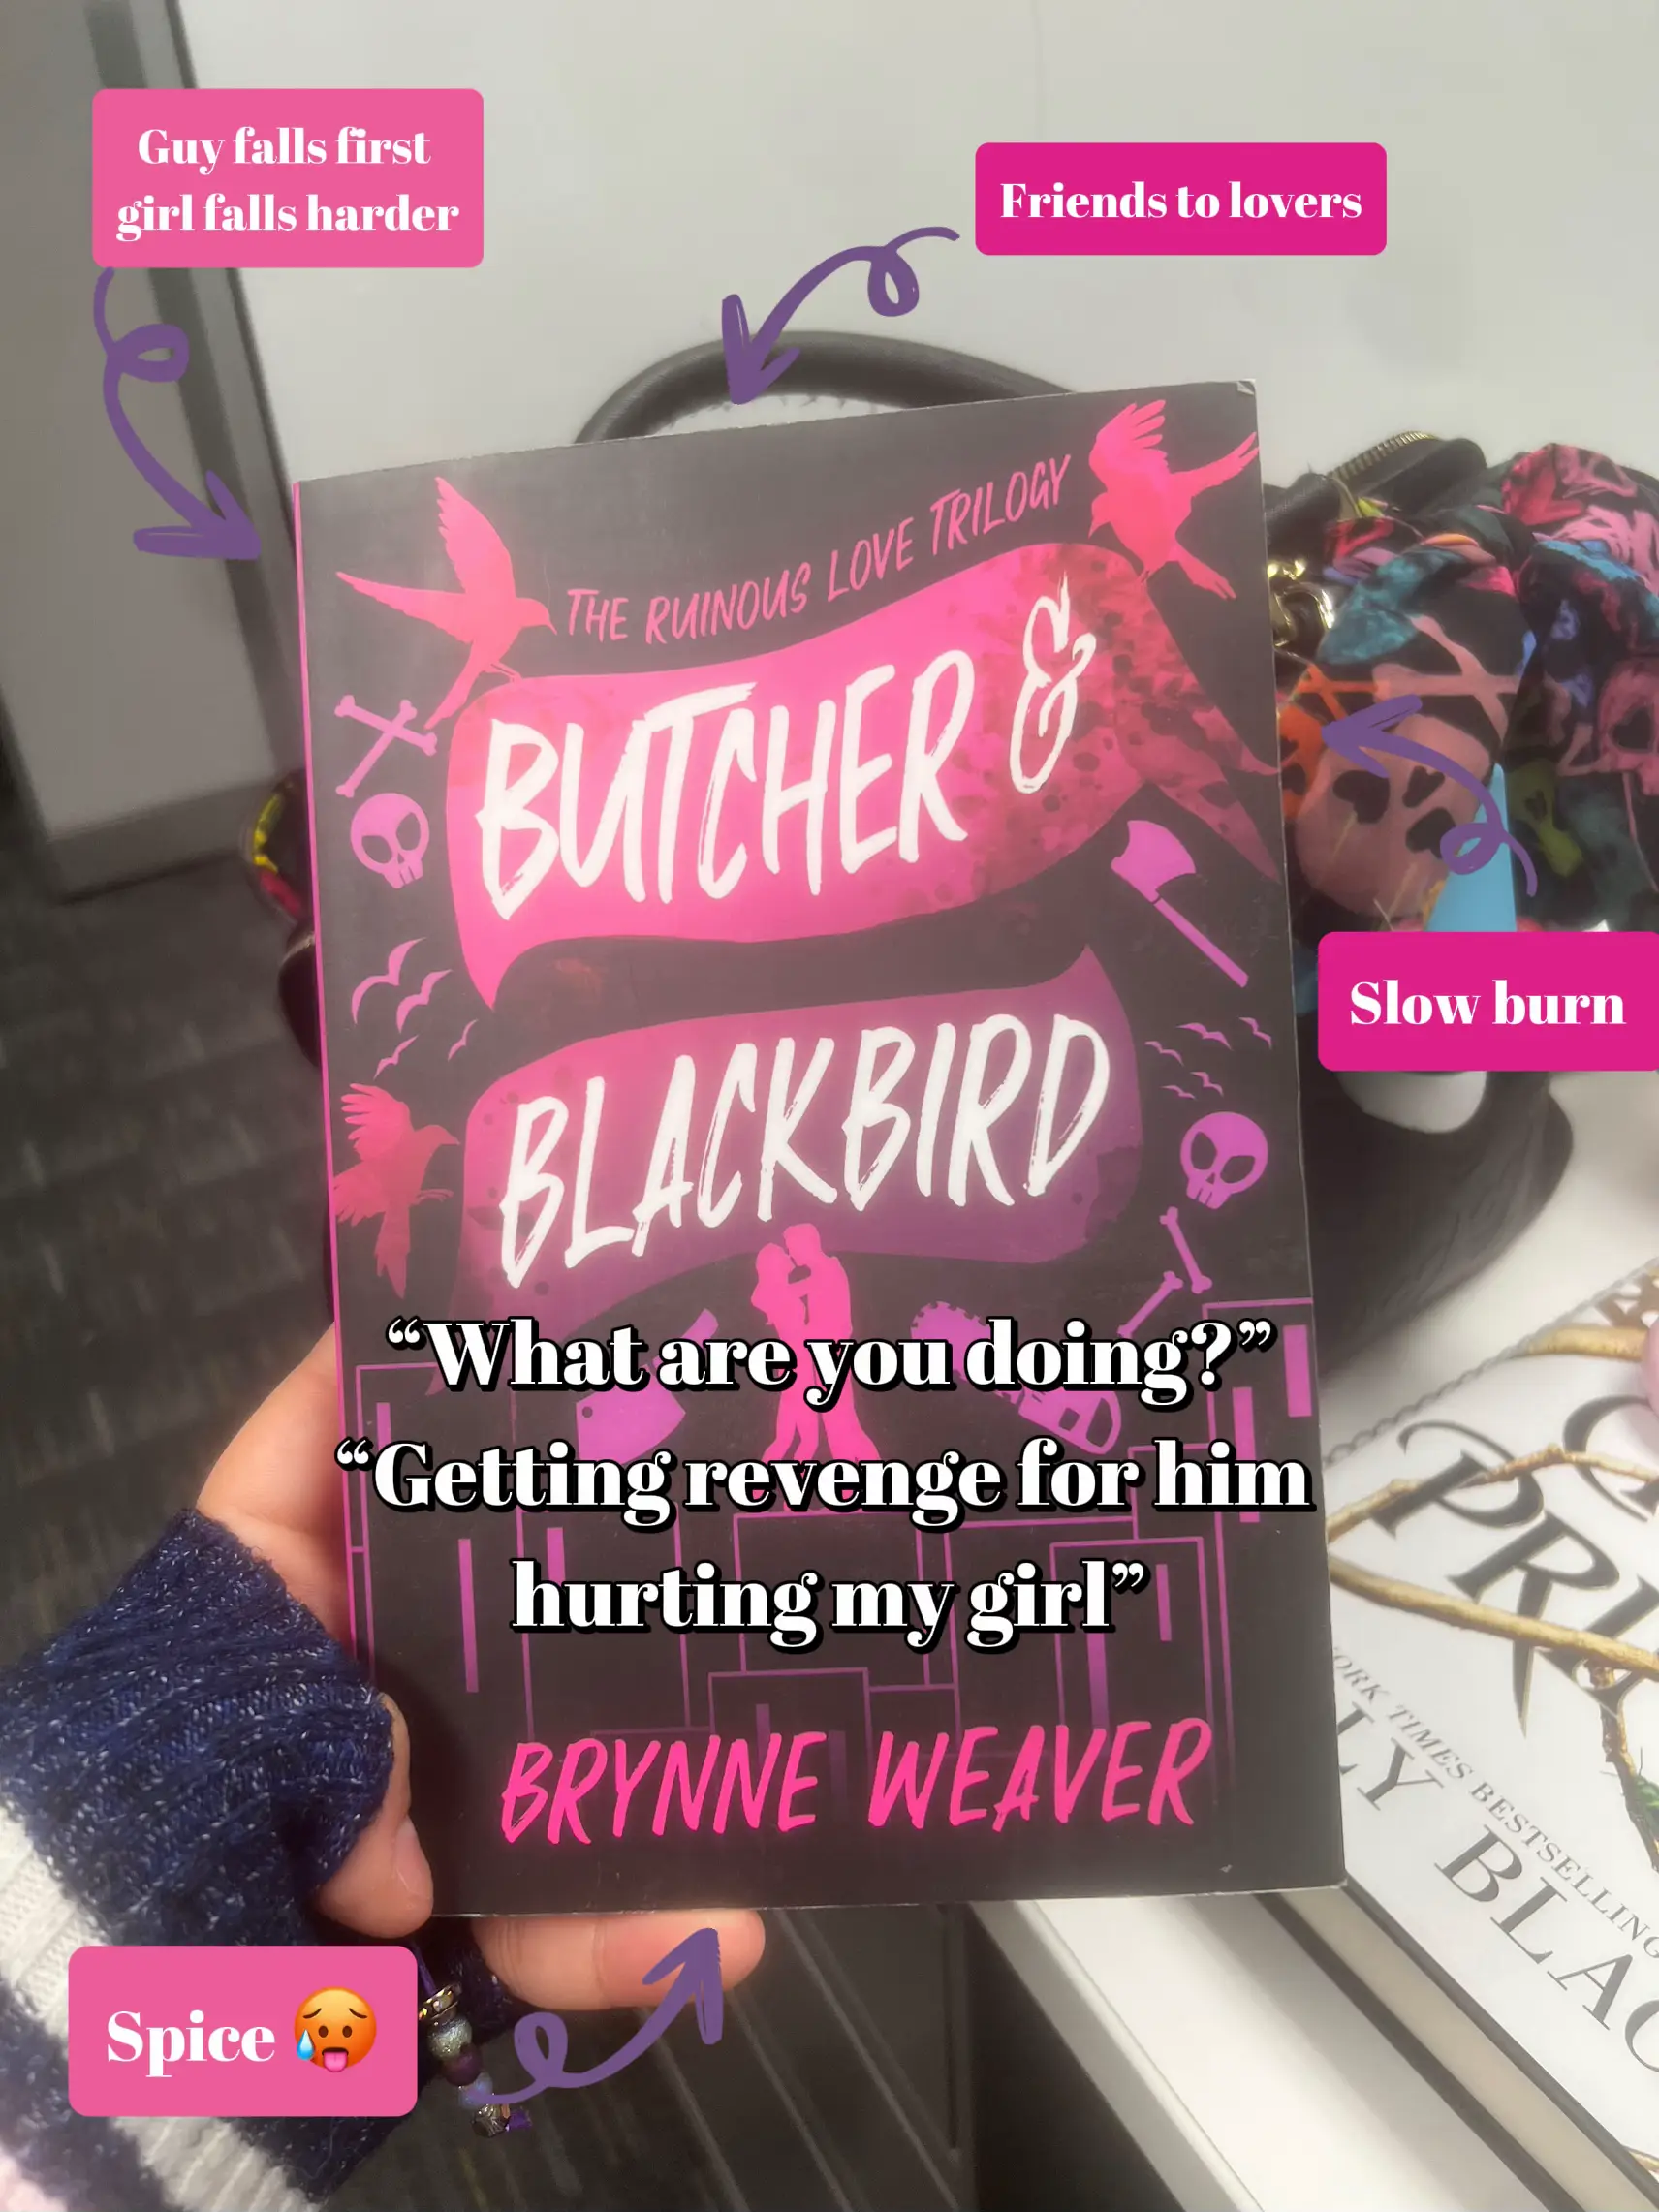 🚨Book rec alert!! Butcher and Blackbird by Brynne Weaver